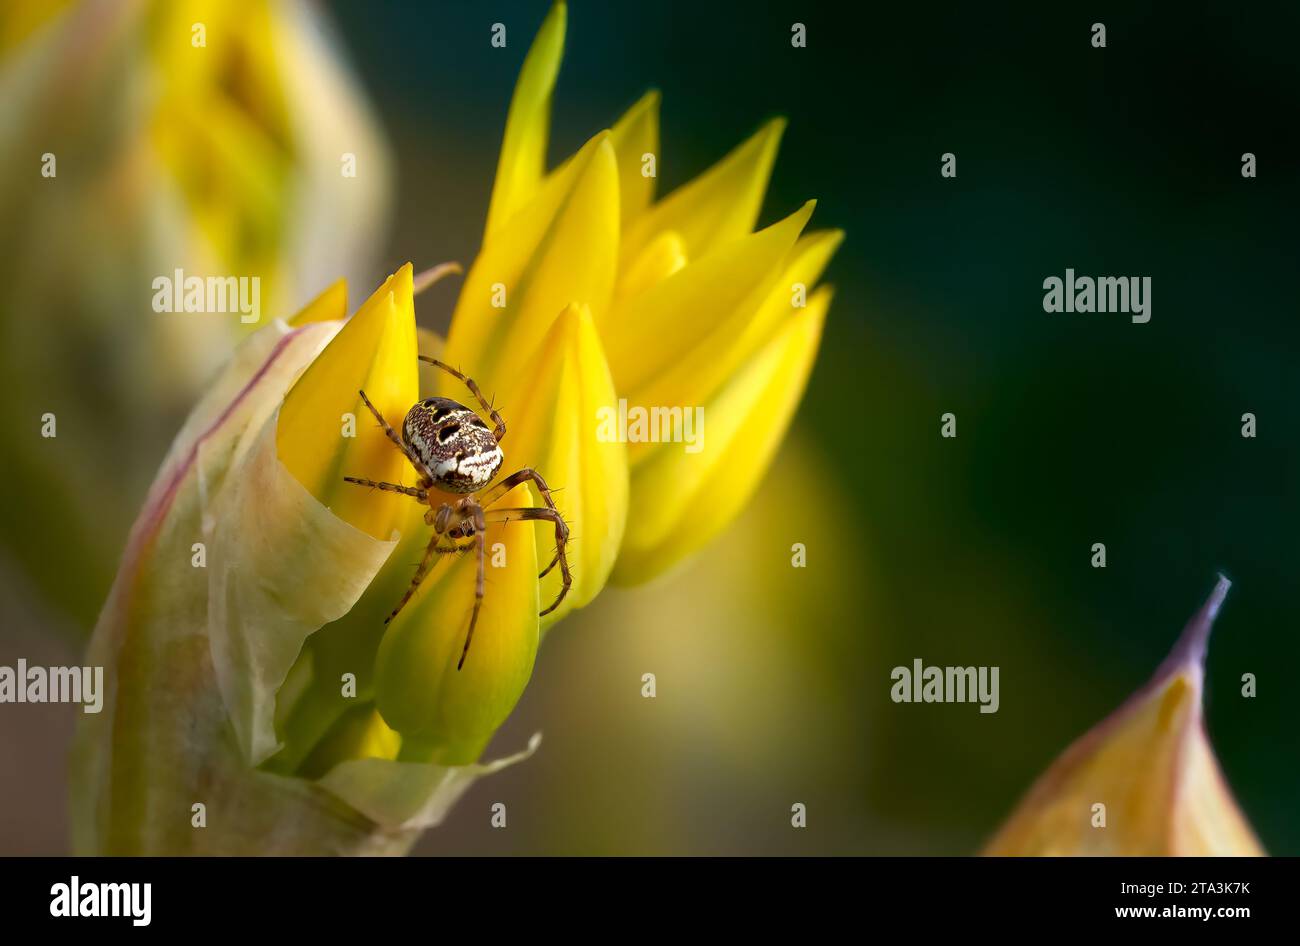 Spider Zilla diodia on flowers of Golden garlic (Allium moly) Stock Photo